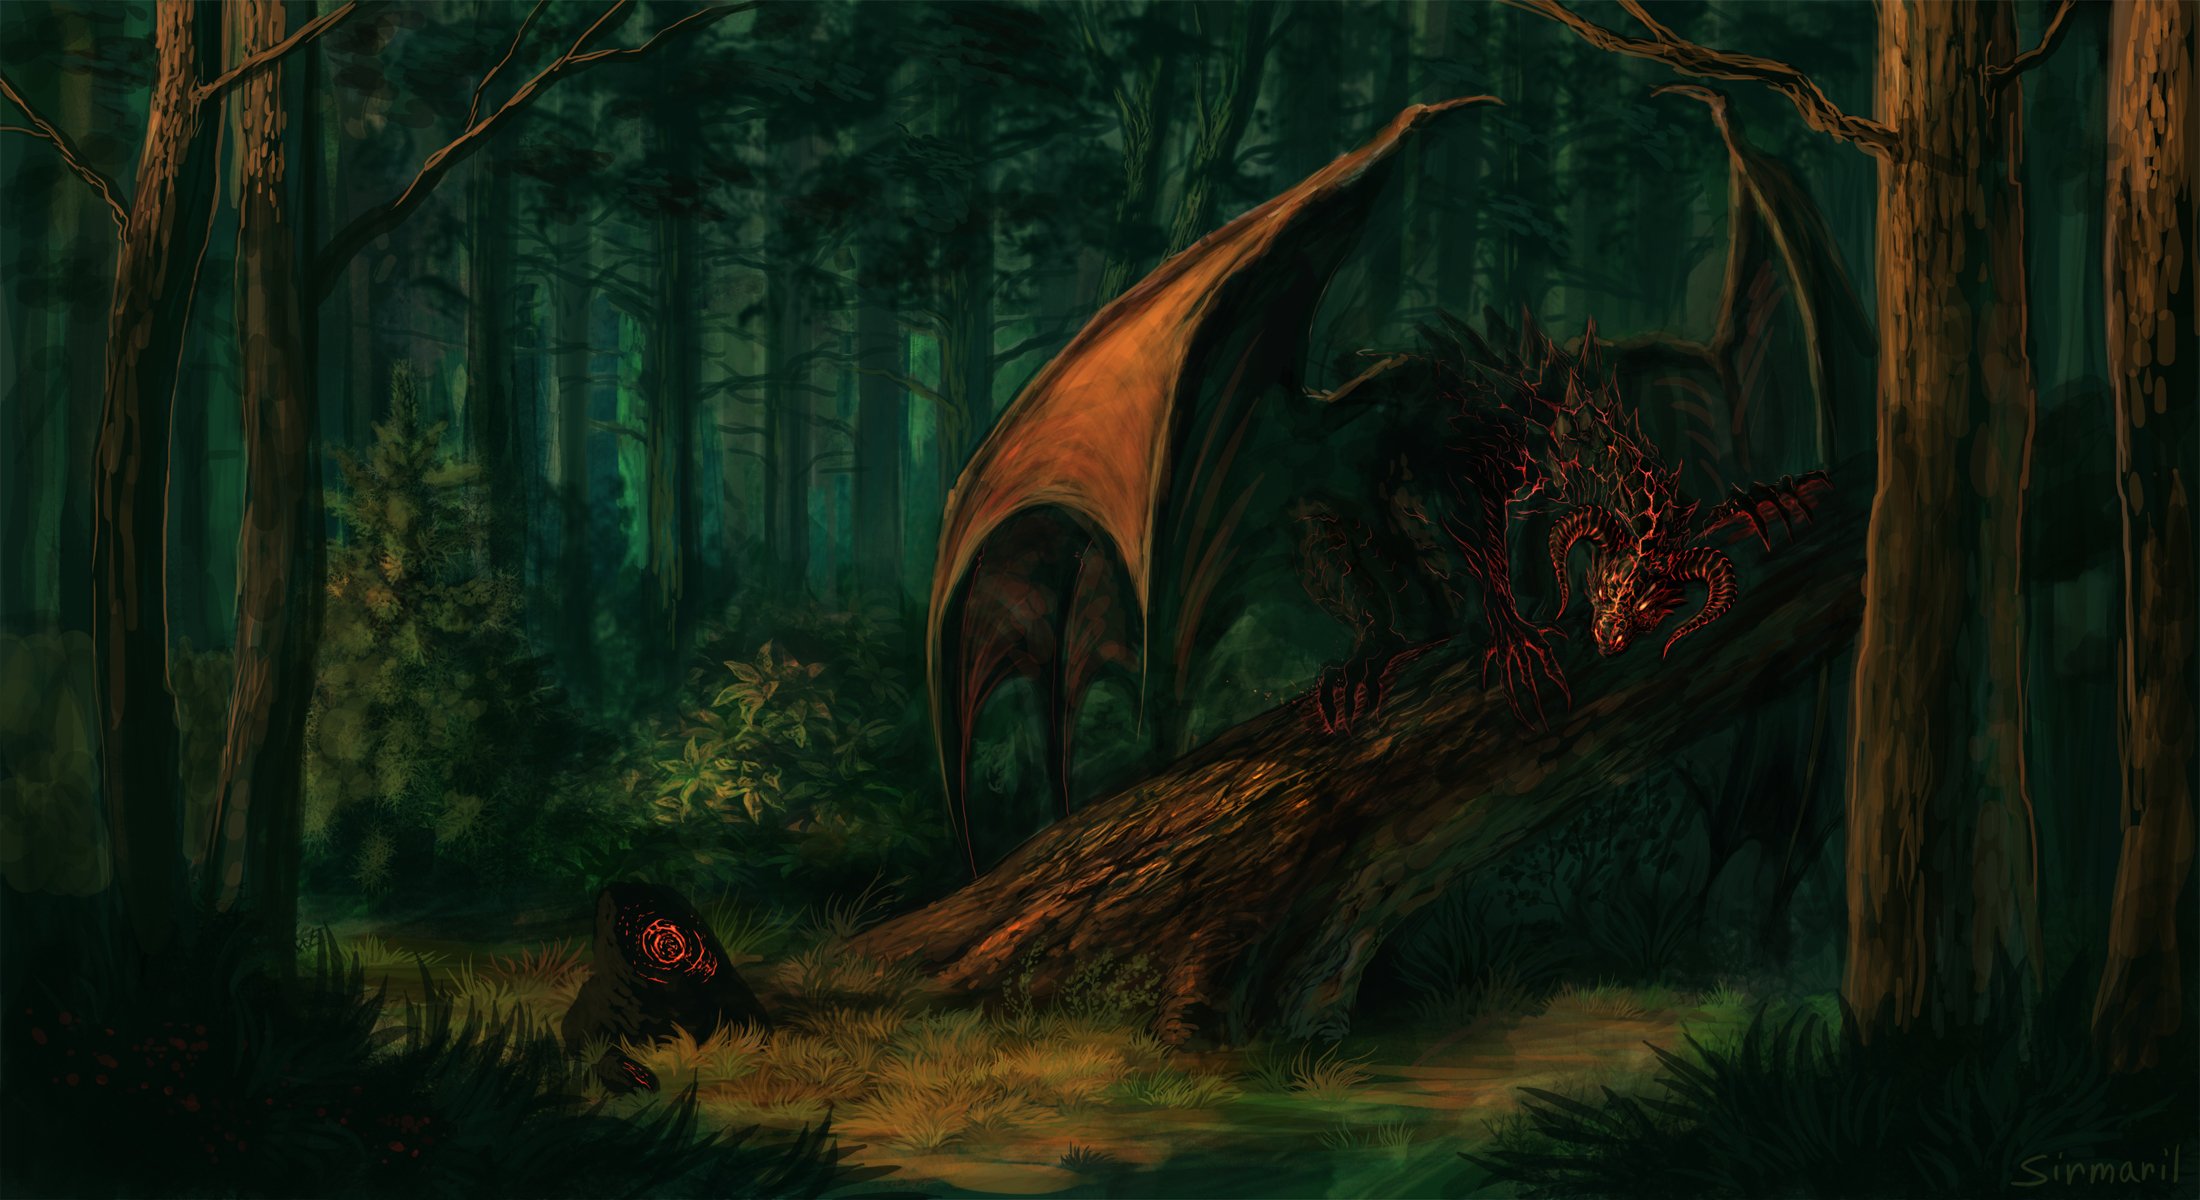 dragon in forest - Sirmanil